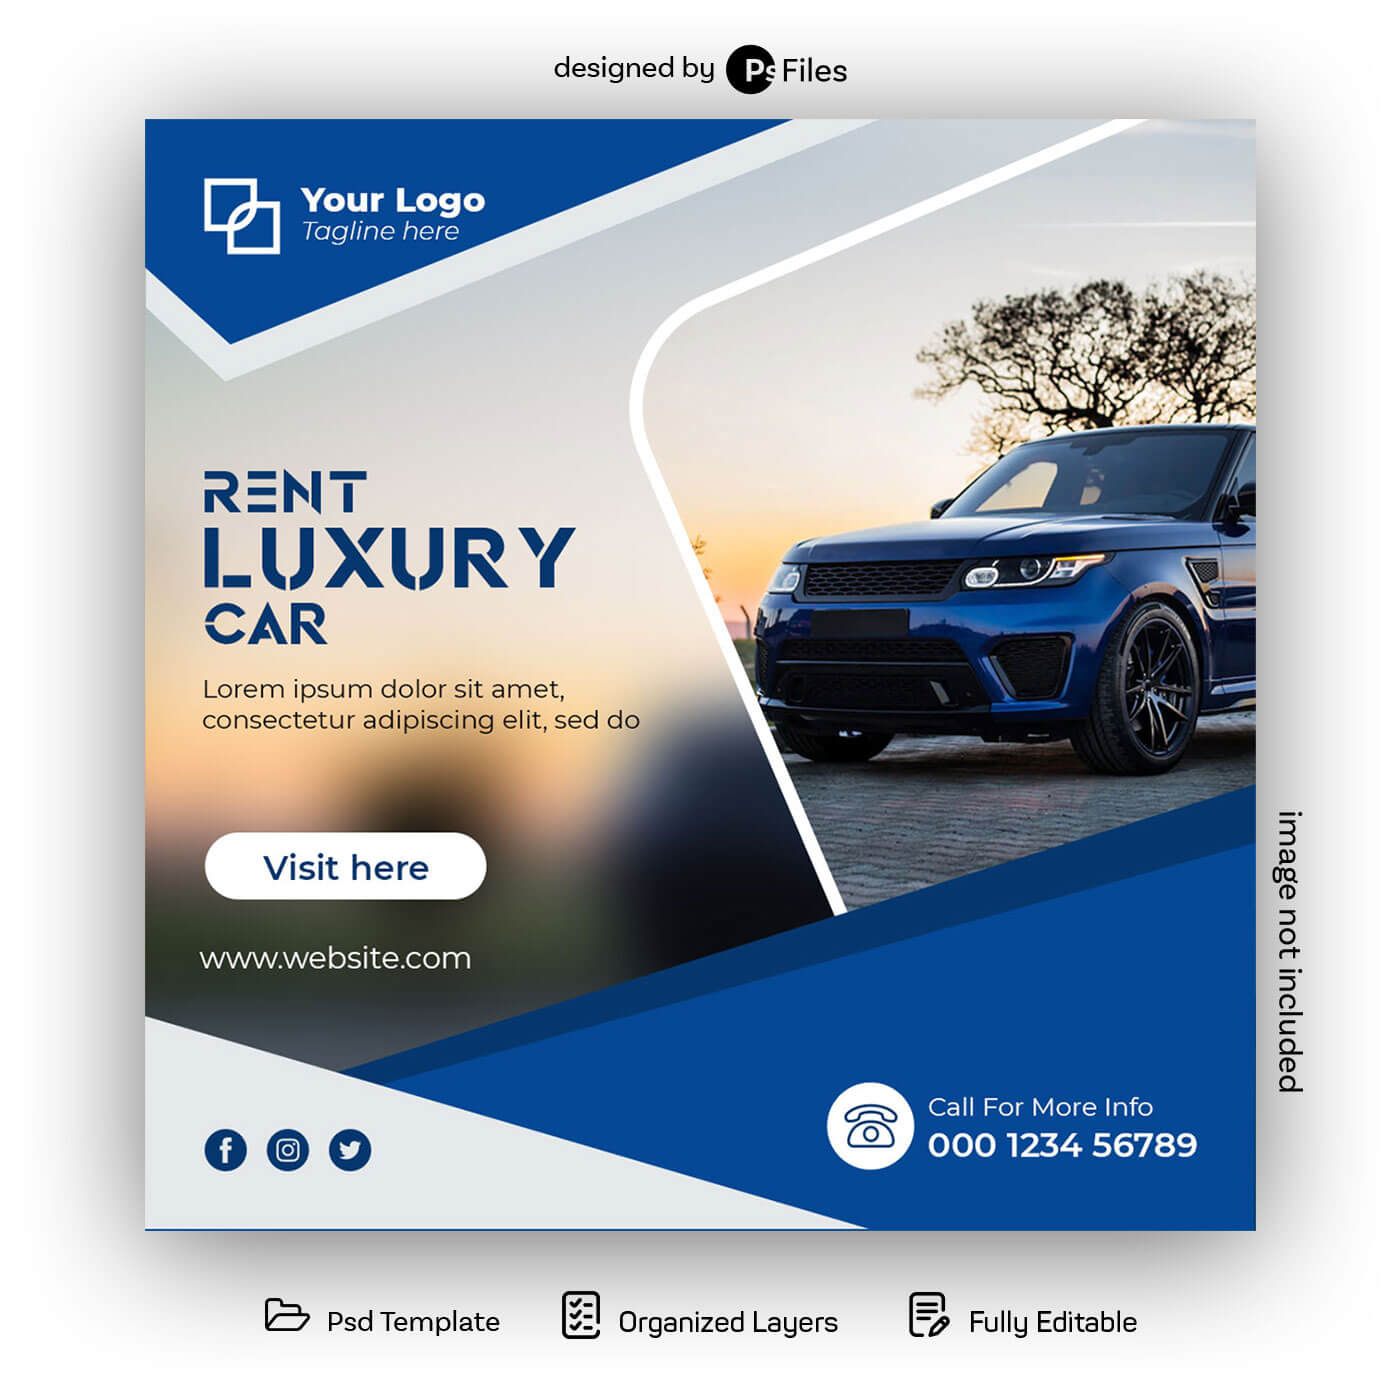 Free Luxury Car Rent Instagram Post Design PSD Template